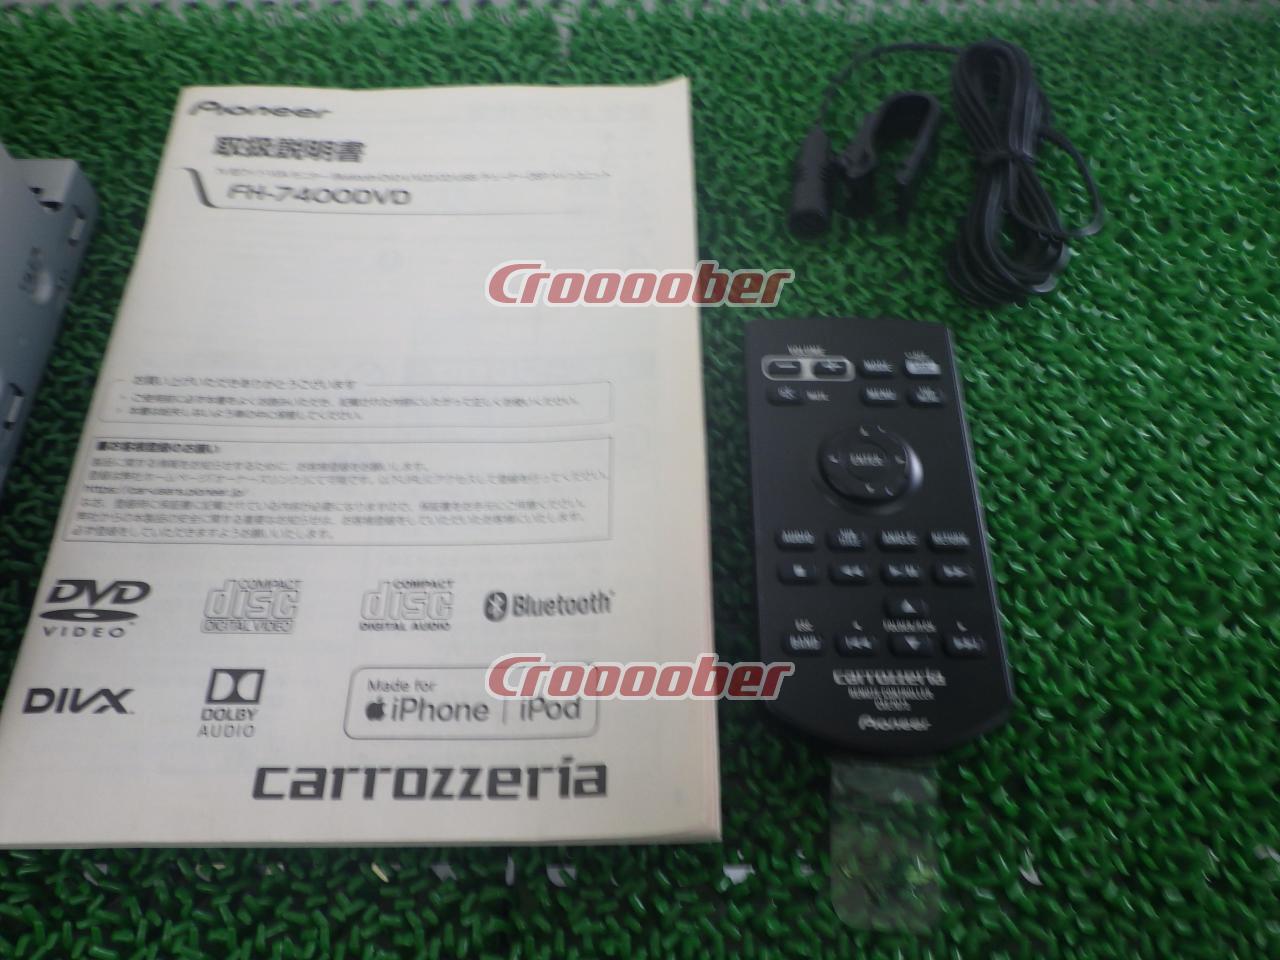 Carrozzeria FH-7400DVD | Memory Navigation(analog) | Croooober